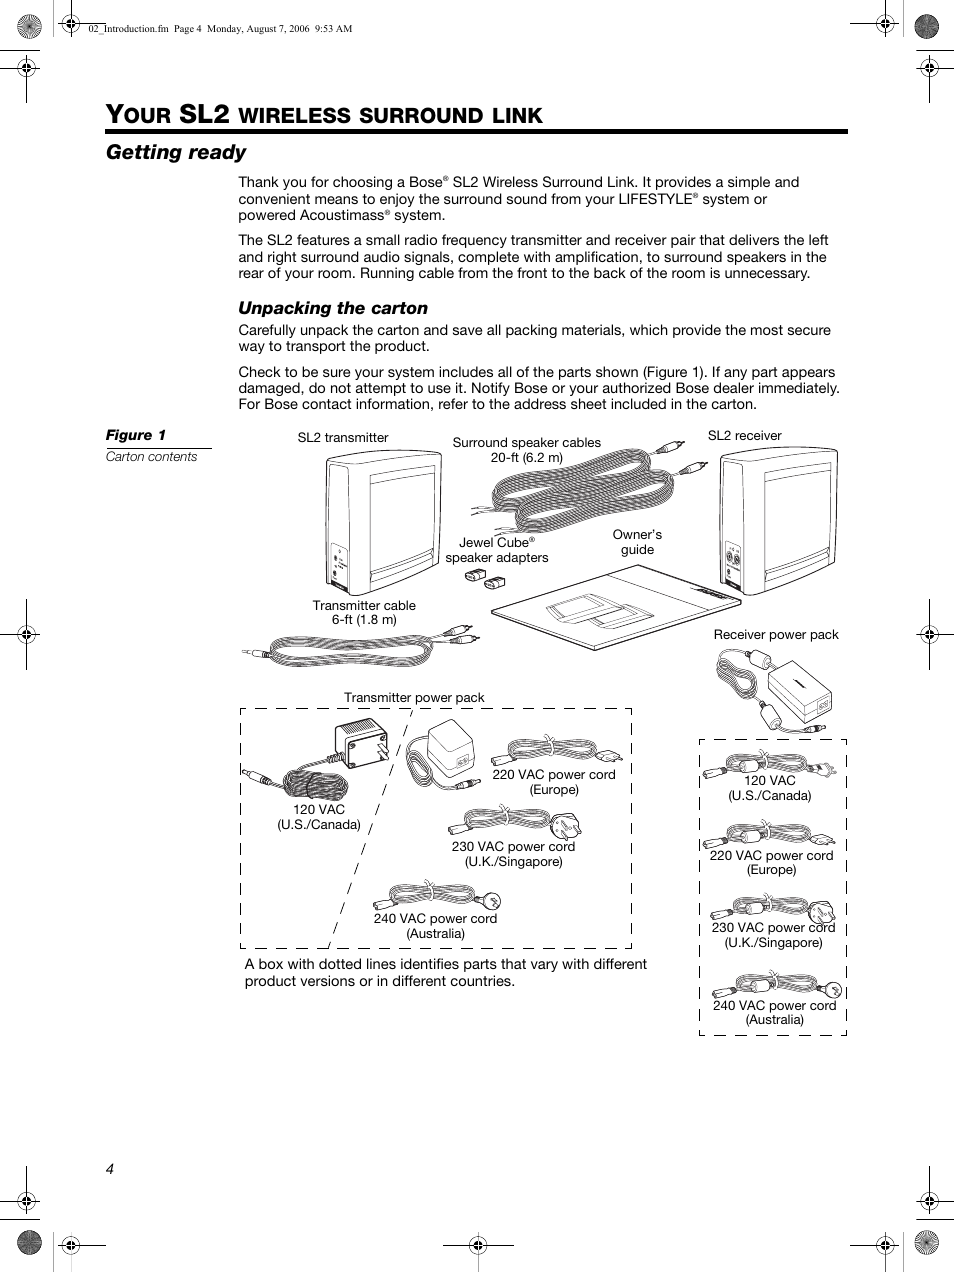 Wireless, Surround, Link | Bose SL2 User Manual | Page 4 / 12